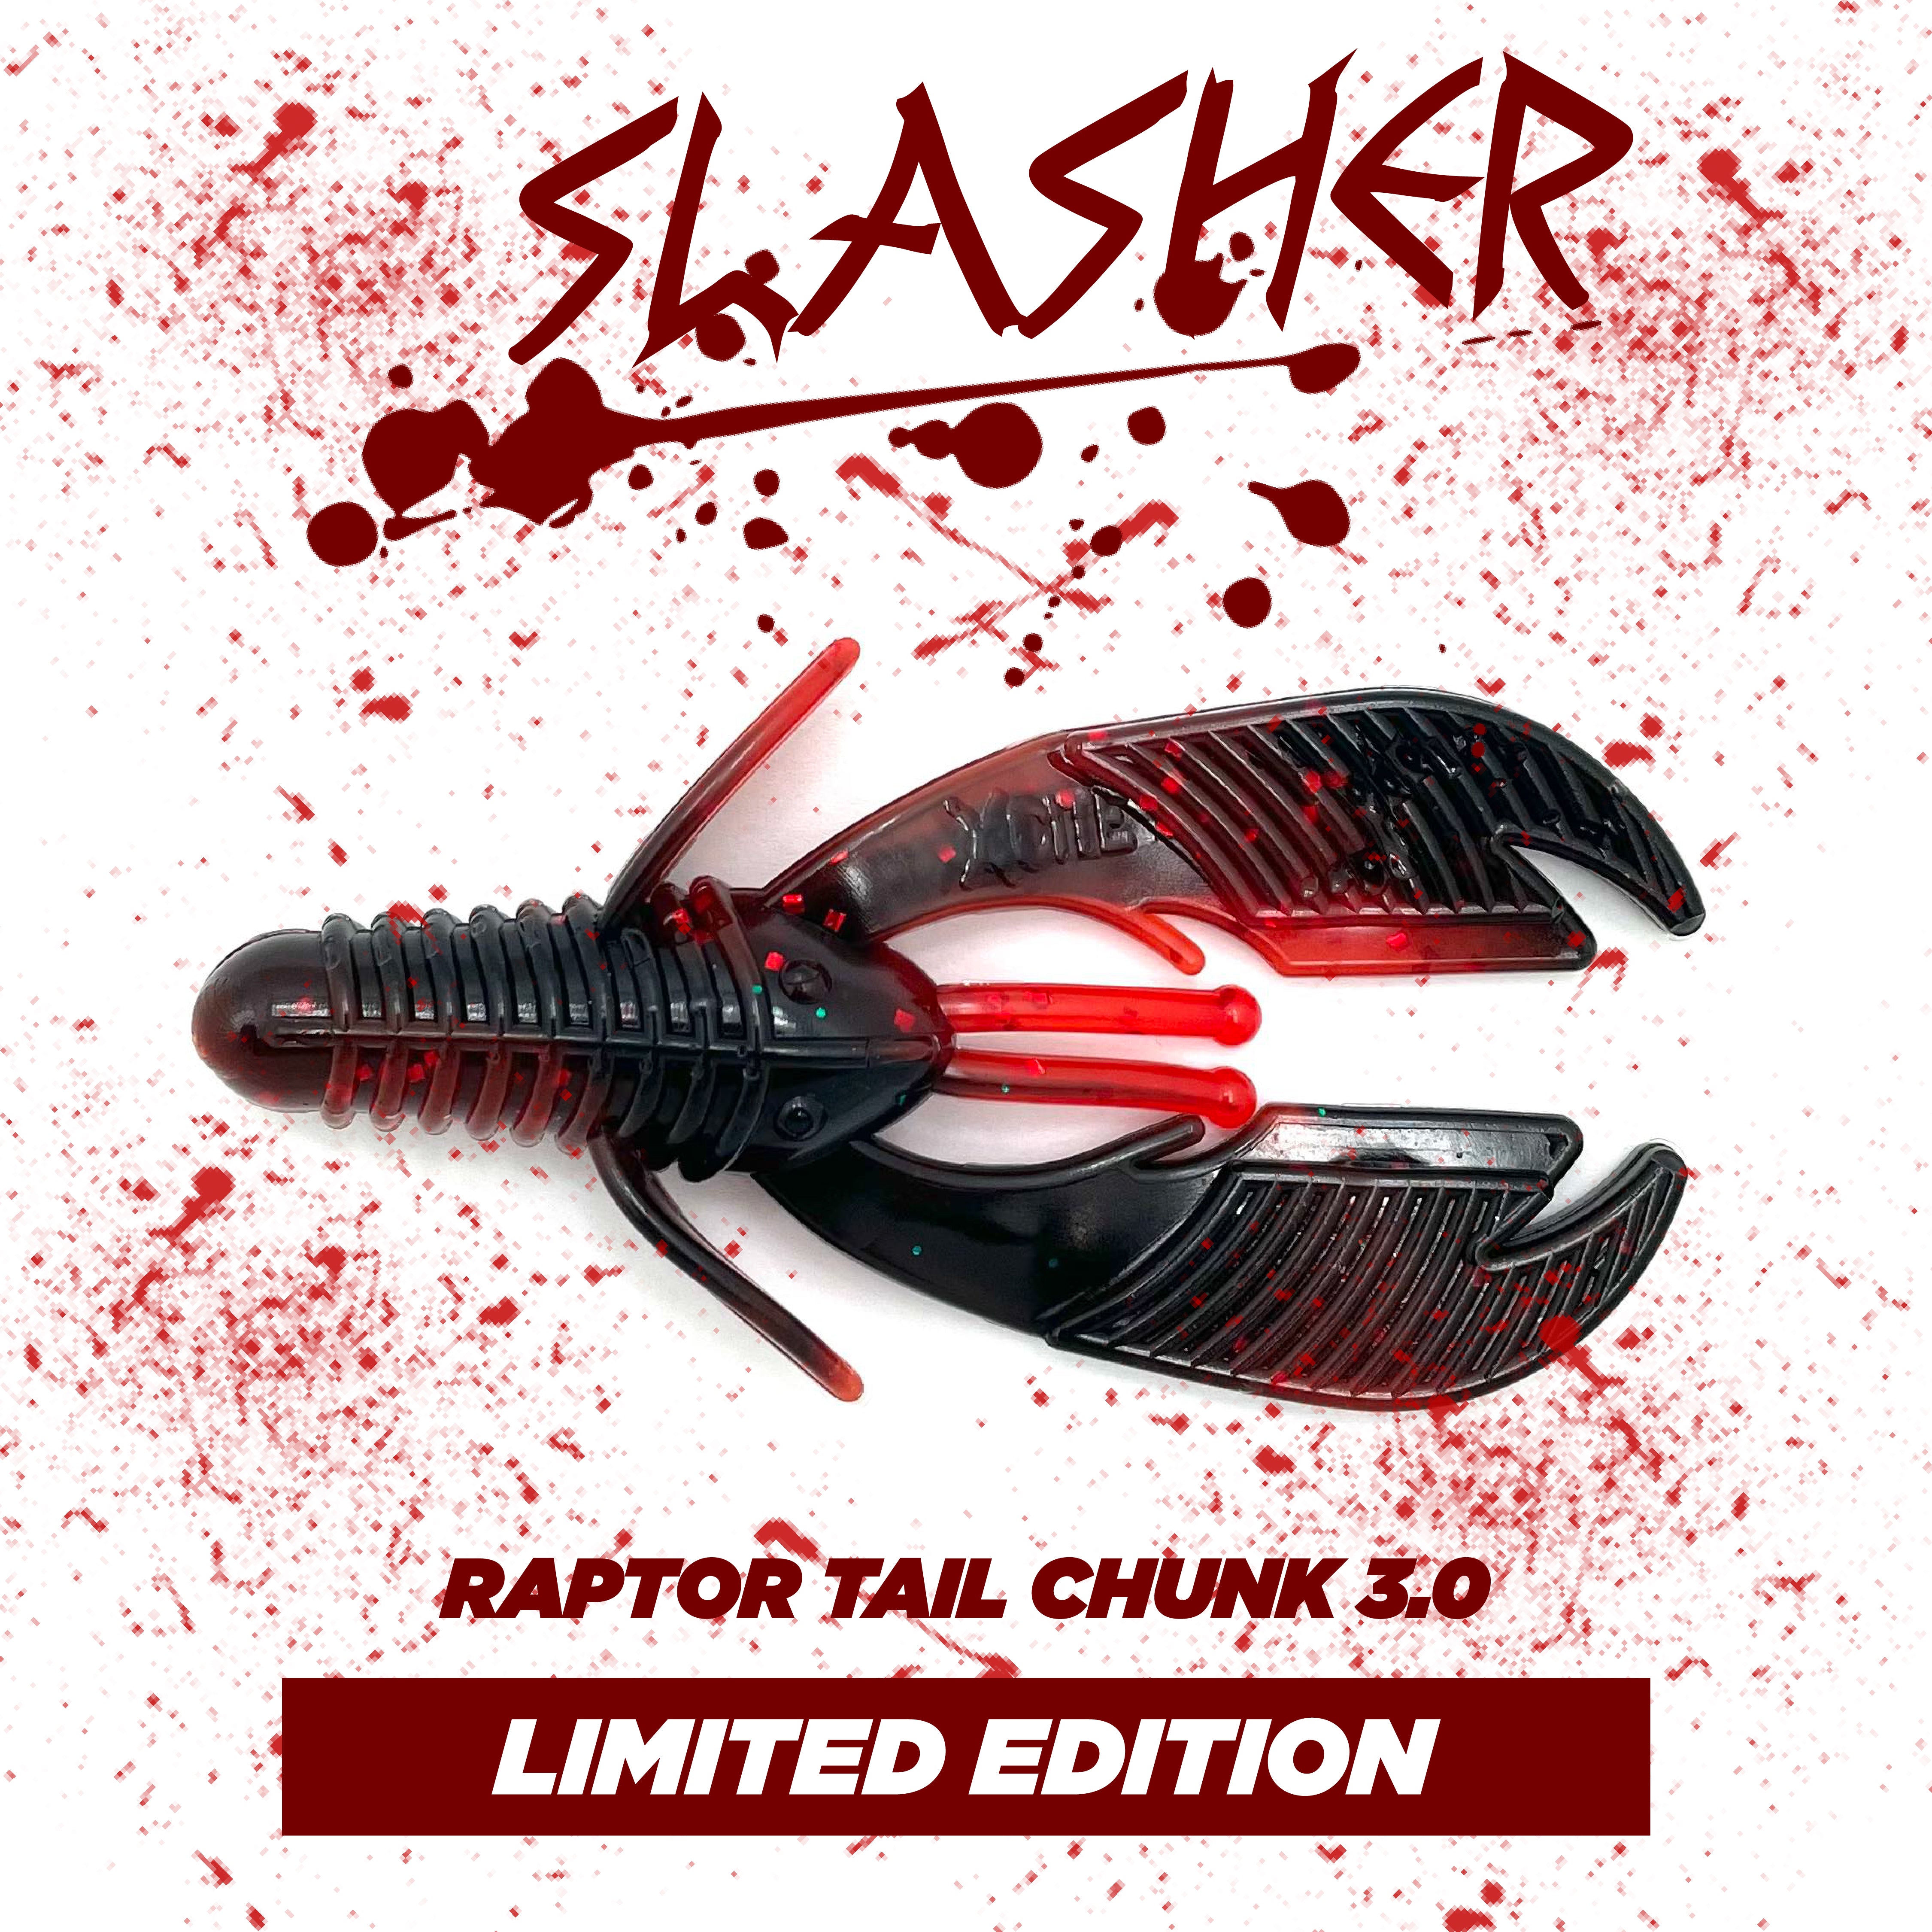 Raptor Tail Chunk 3.0 - Slasher